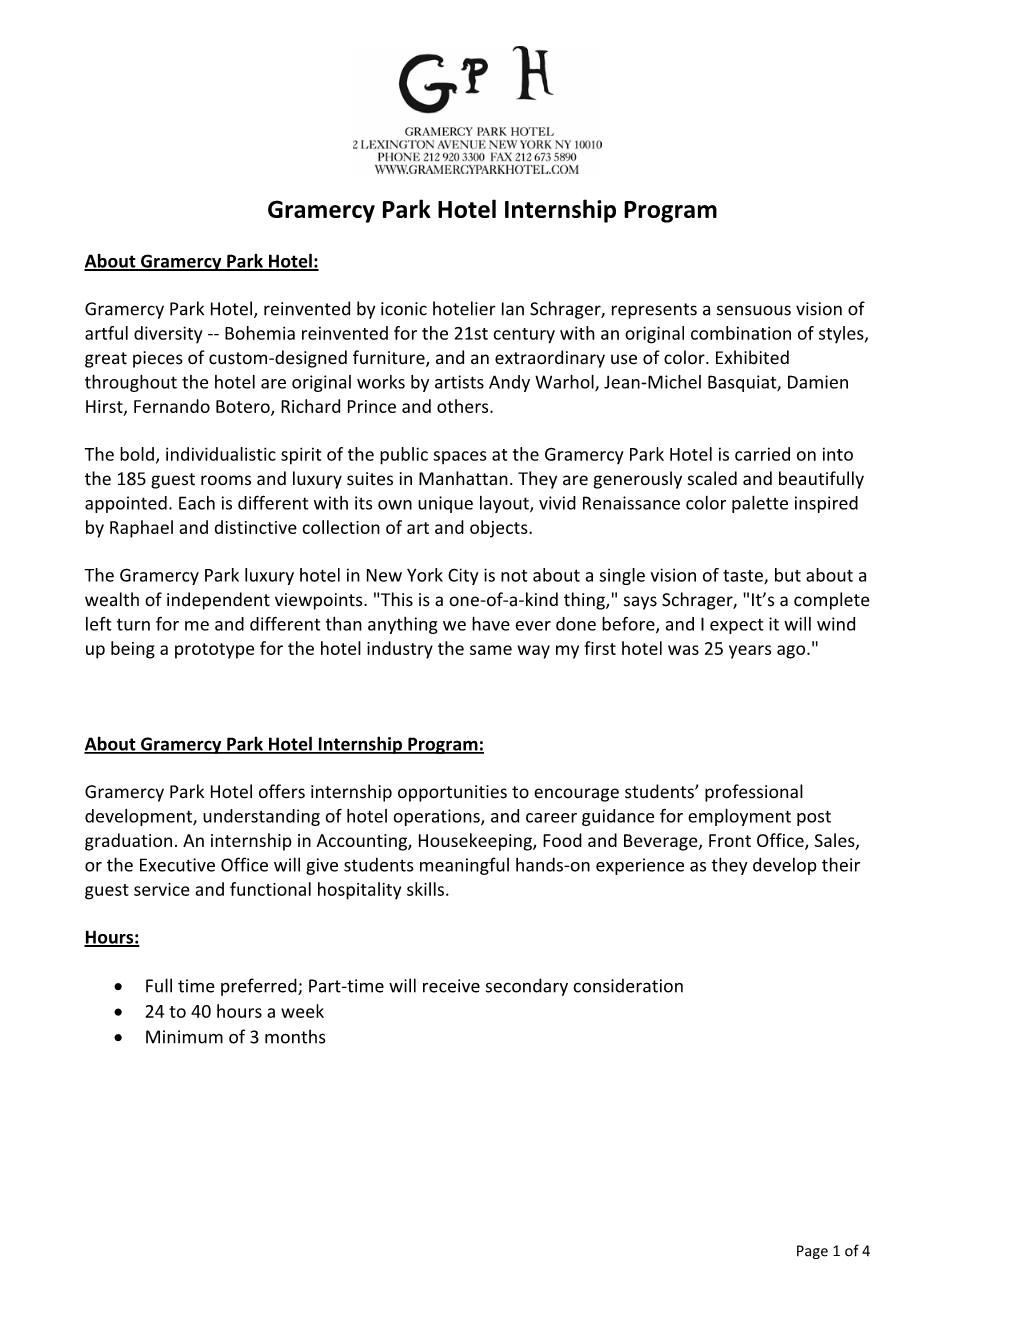 Gramercy Park Hotel Internship Program